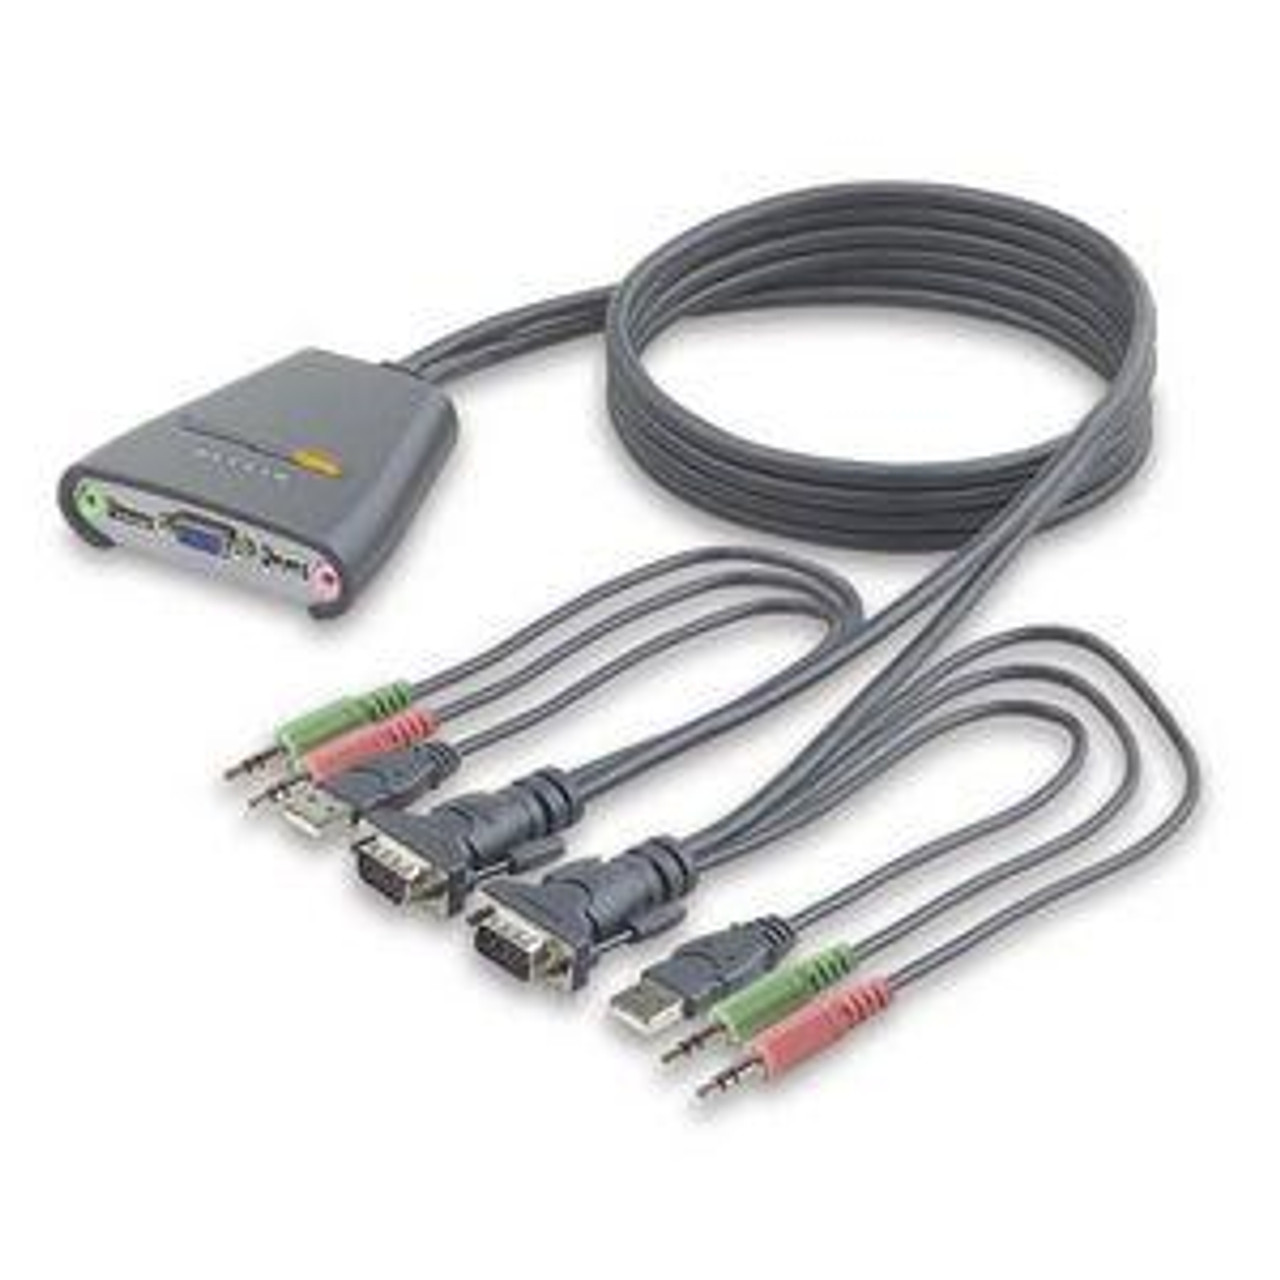 F1DL102U Belkin 2-Port KVM Switch with Built-In Cabling 2 x 1 2 x Type A USB, 2 x HD-15 Video Desktop (Refurbished)